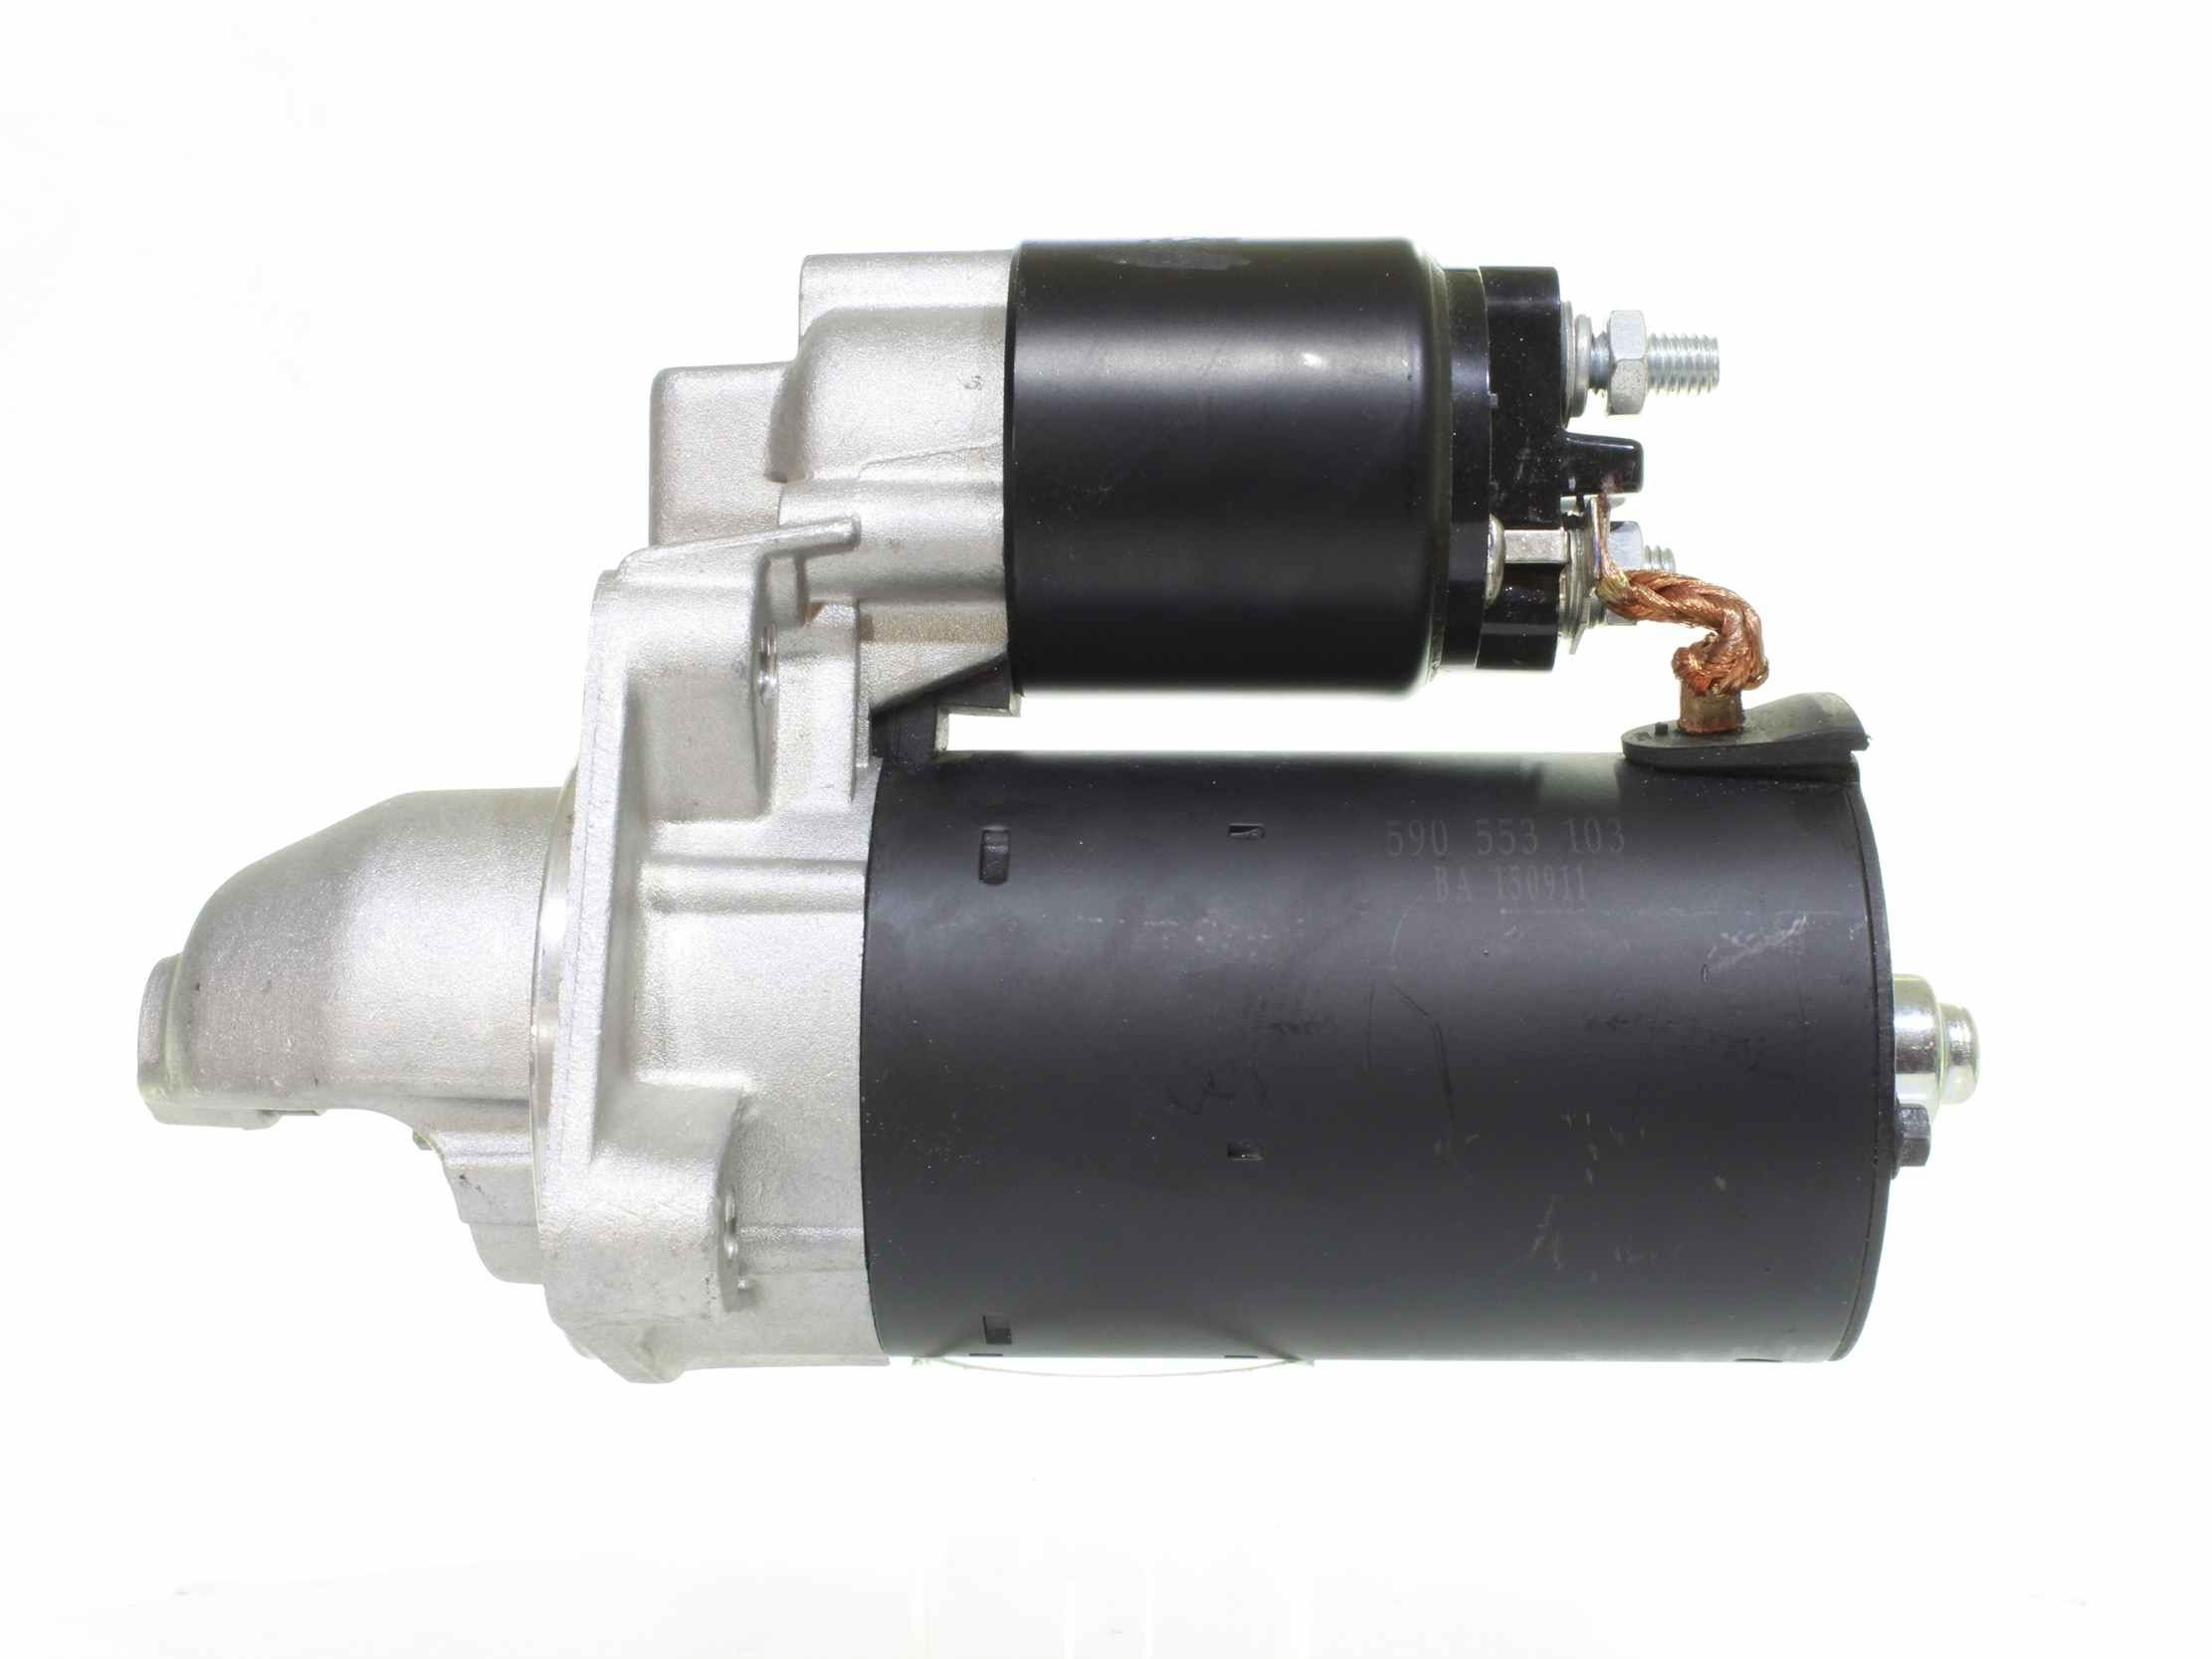 10439795 Engine starter motor ALANKO STR50448 review and test